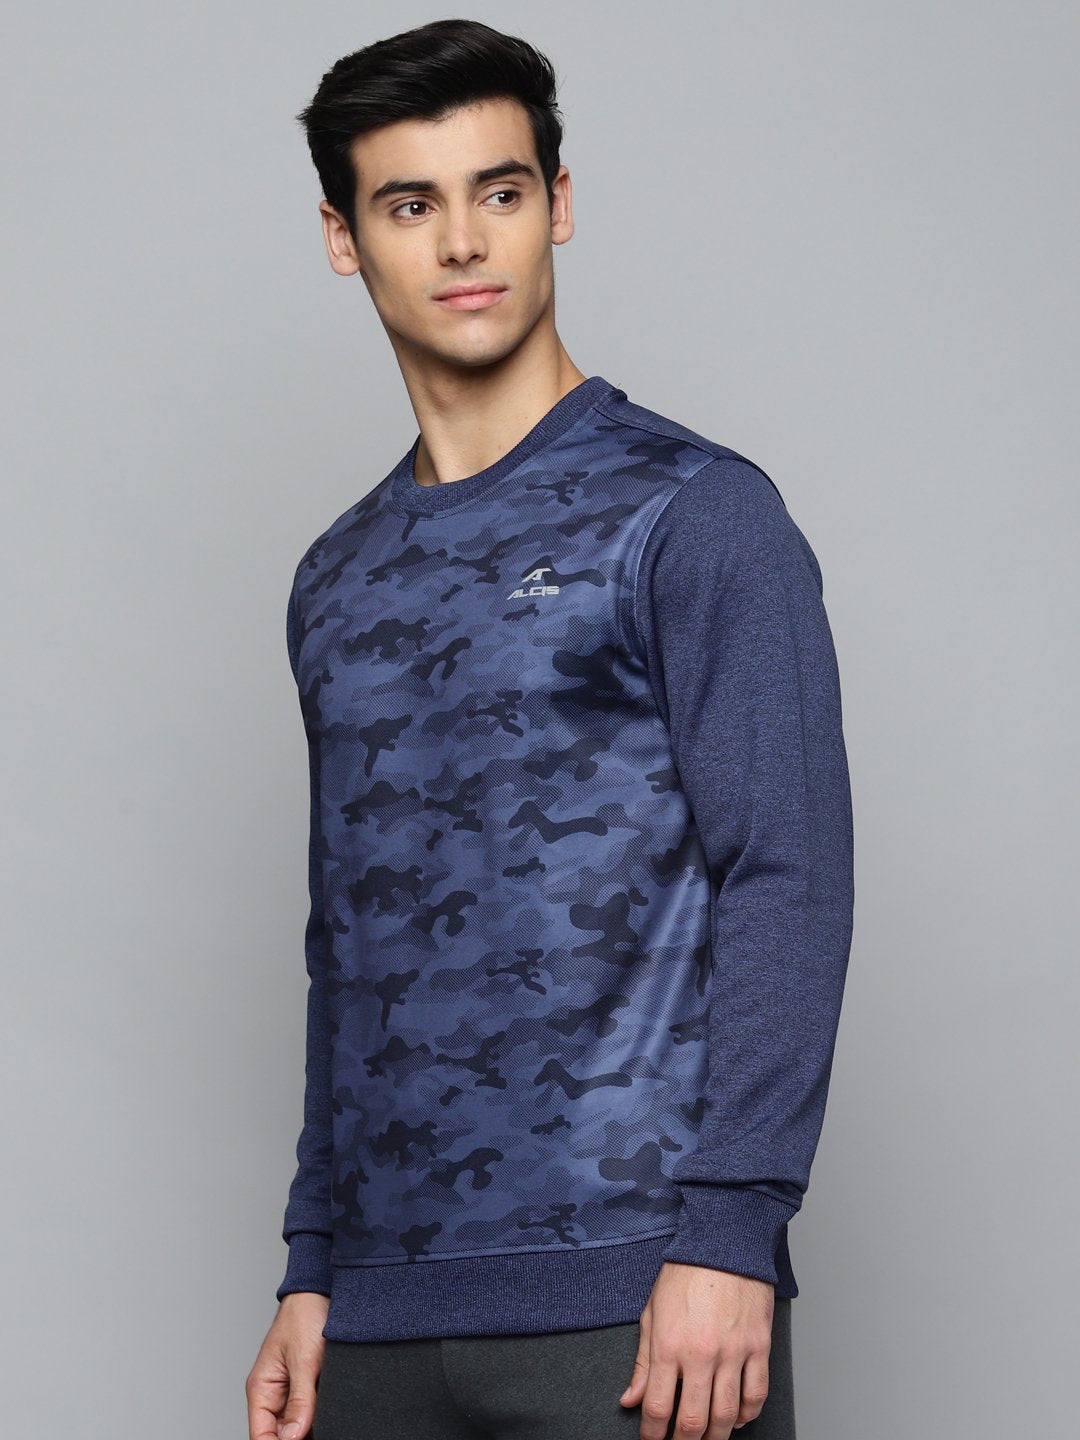 Alcis Men Navy Blue Camouflage Printed Sweatshirt